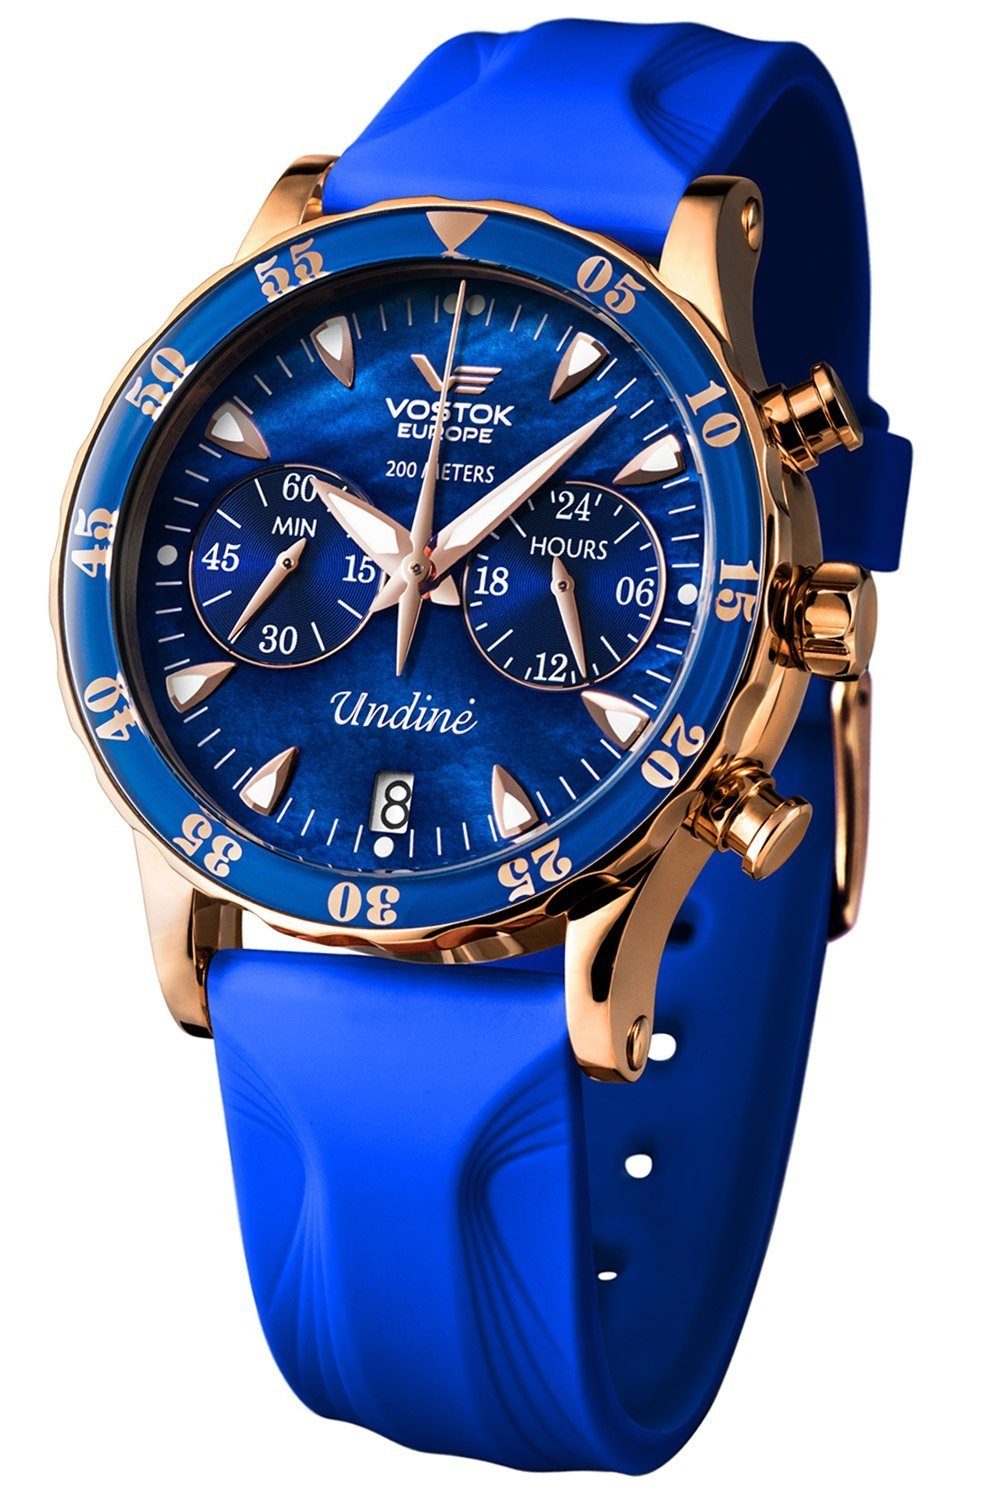 Lady Line Armbändern Blau mit Chrono 3 Undiné Quarzuhr Europe Vostok